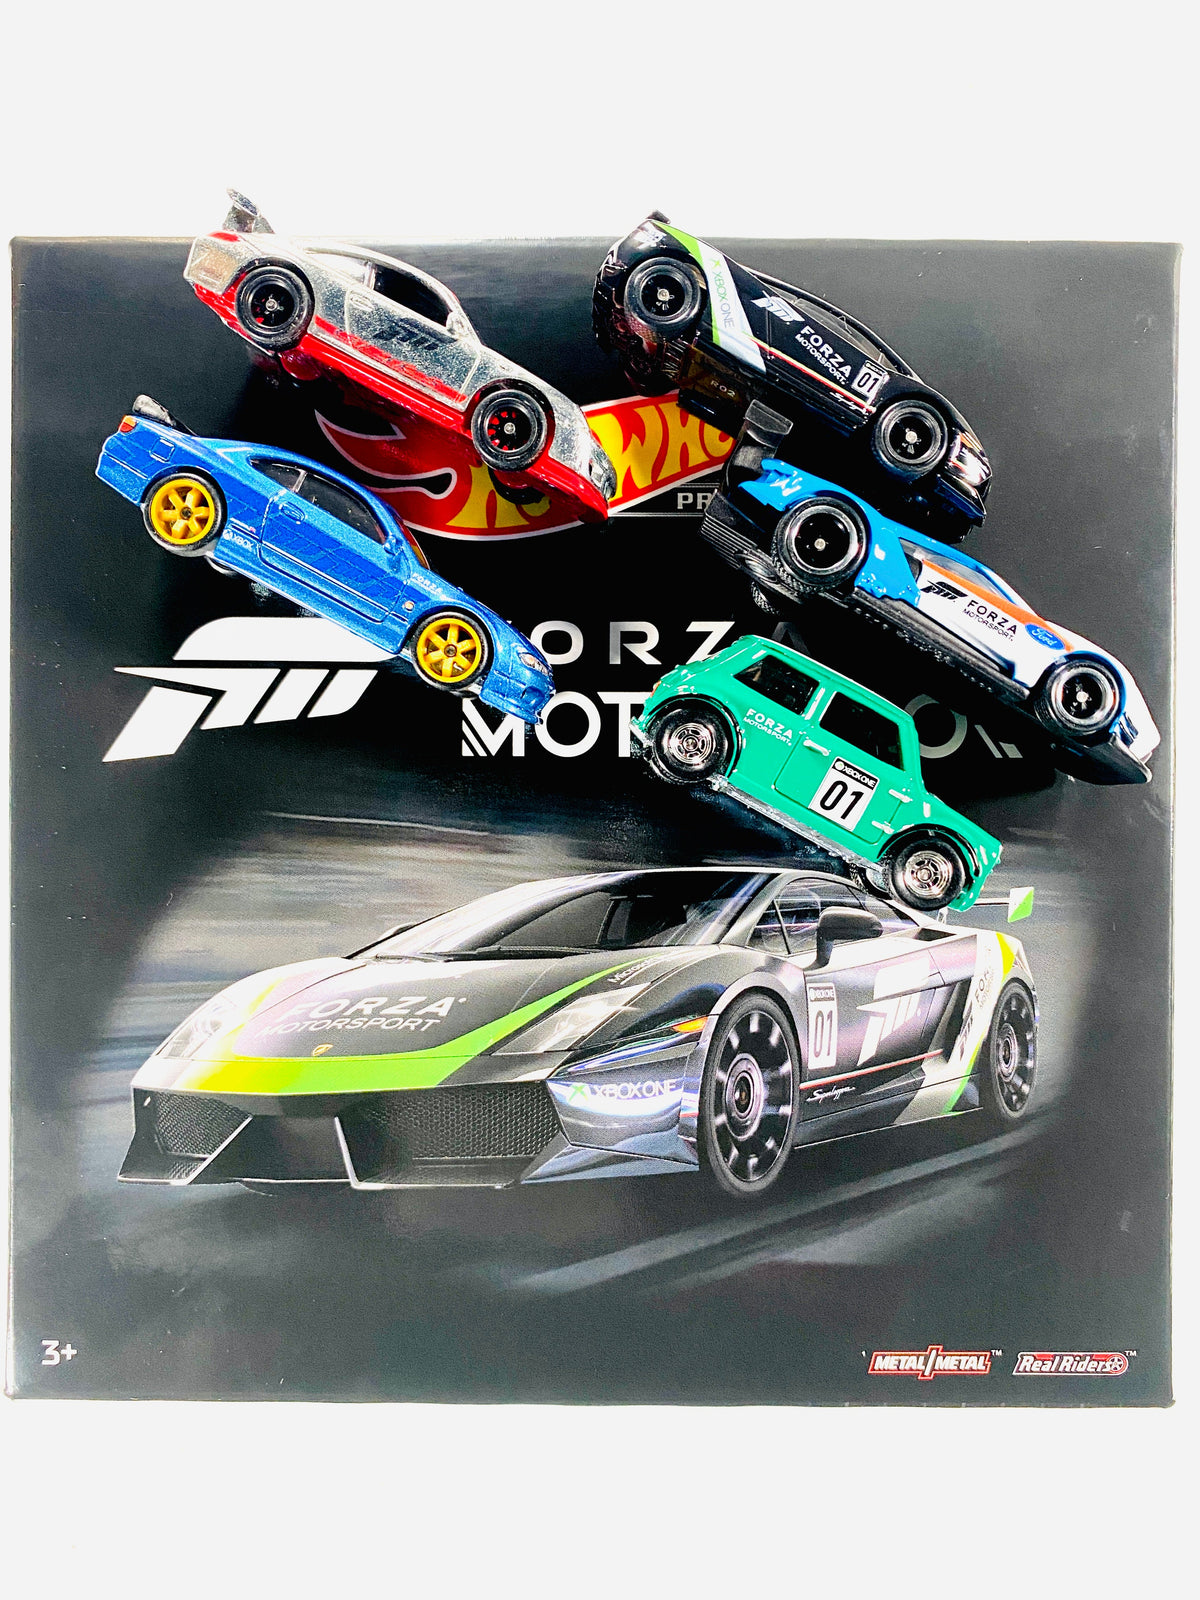 Hot Wheels 1:64 Premium Set of 5 Forza Motorsport – Petersen Automotive  Museum Store